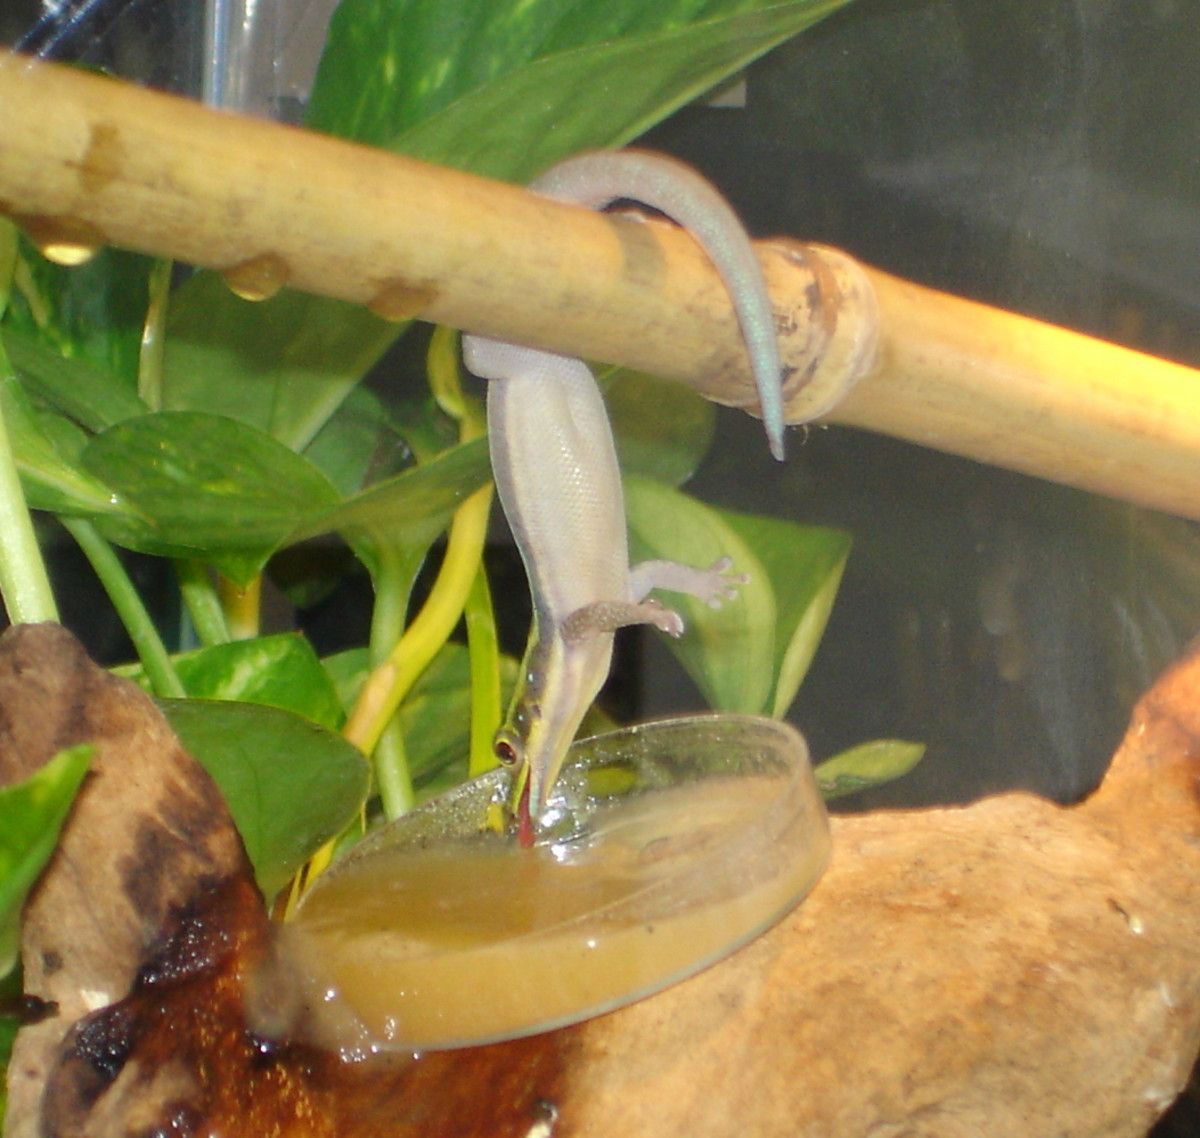 The geckos get calcium in their fruit baby food